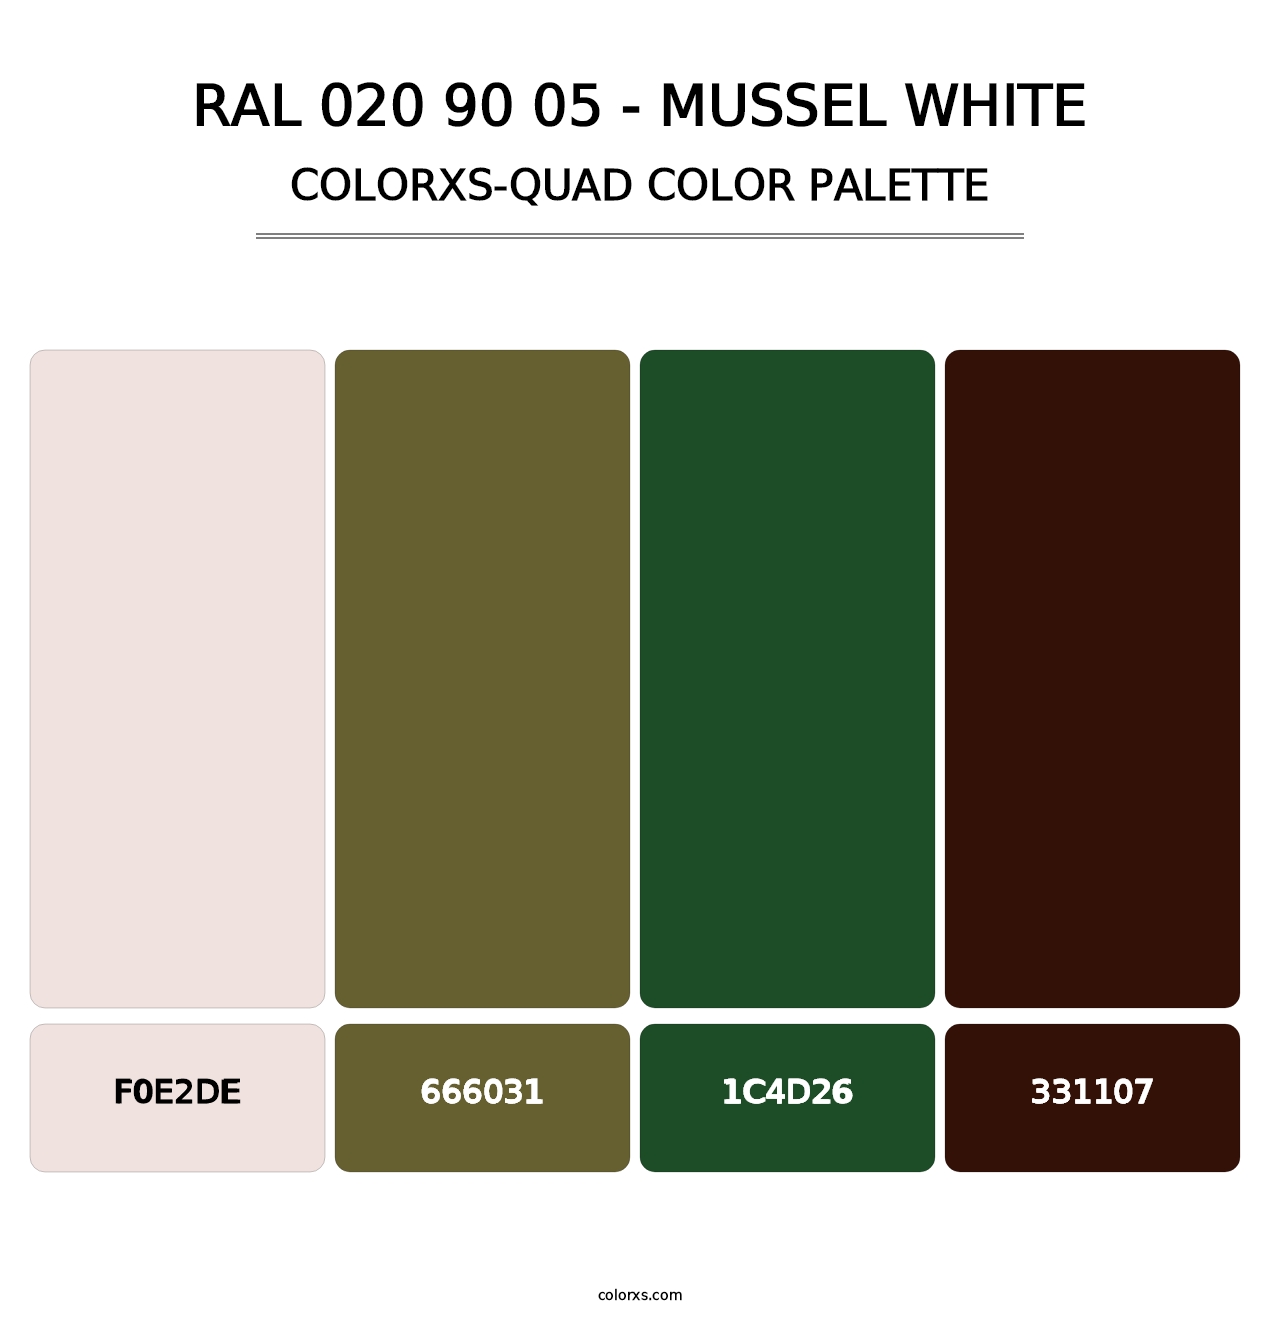 RAL 020 90 05 - Mussel White - Colorxs Quad Palette